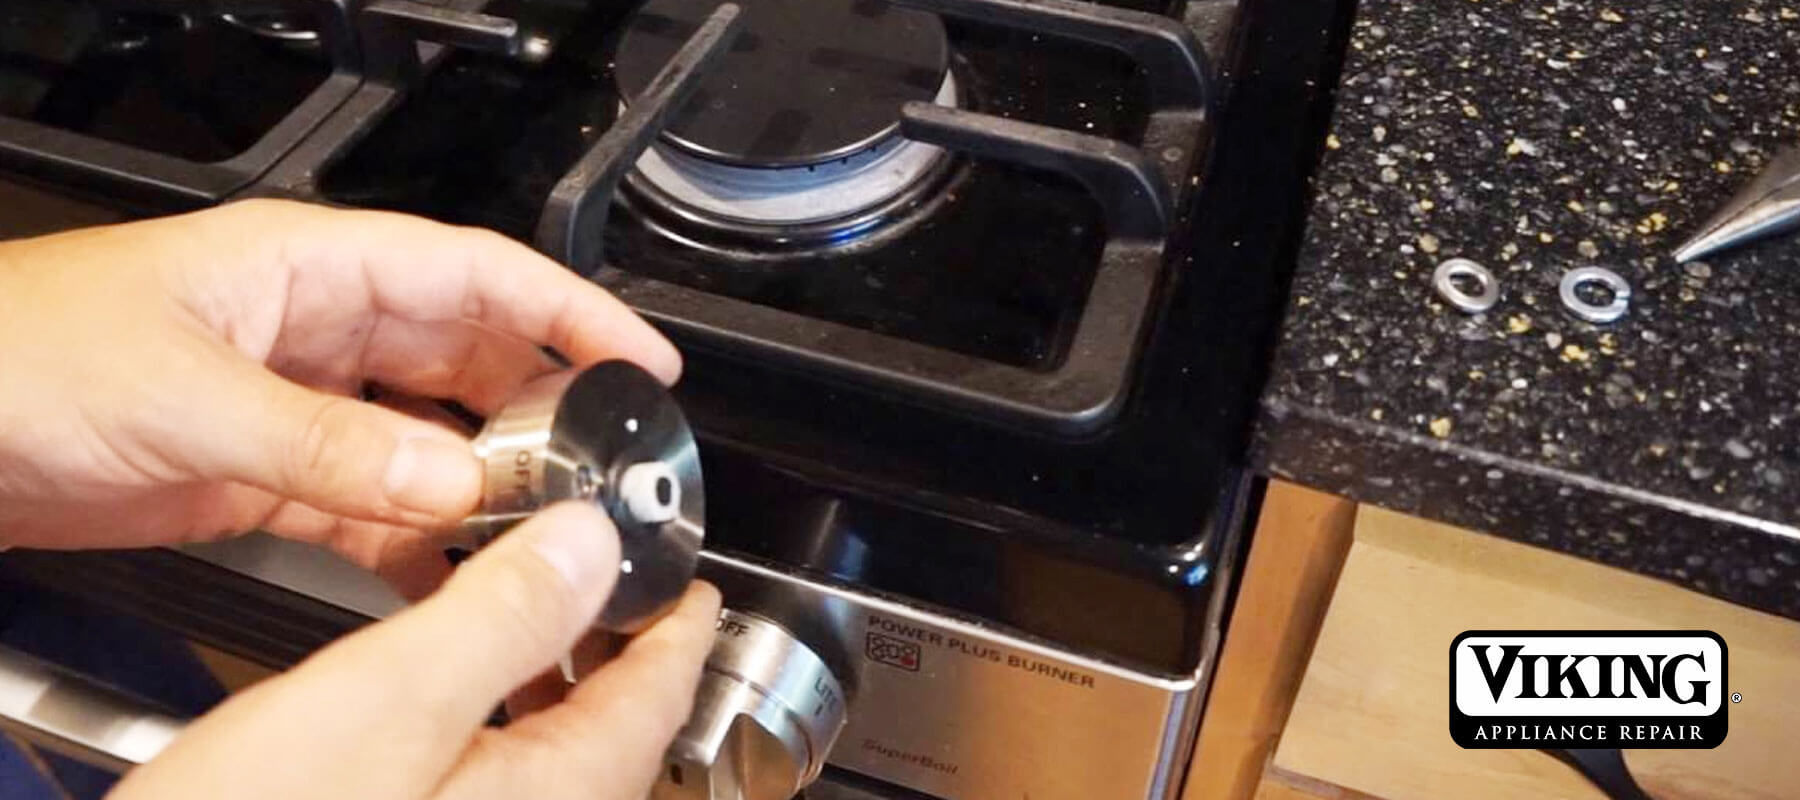 Viking Cooktop Repair  Viking Appliance Pros